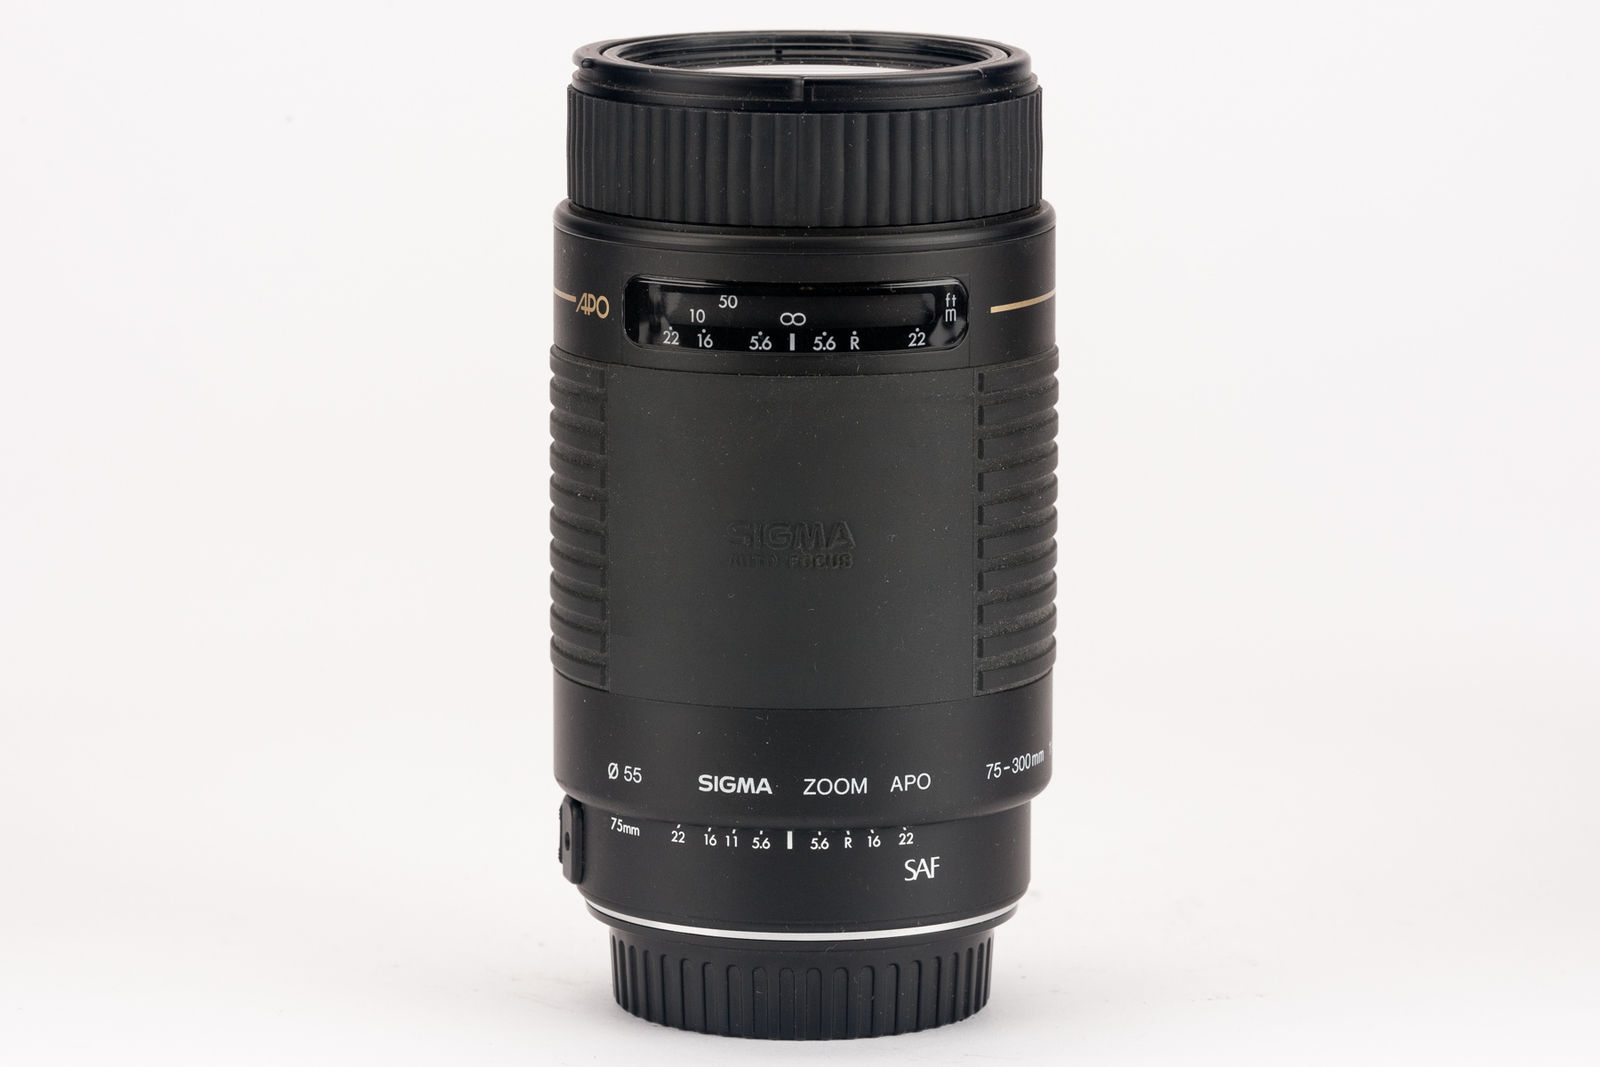 C ef 6. Sigma 70-300mm f/4-5.6 apo macro Zen. 75-300mm f4-5.6. Yashica Lens af 75-300mm 4-5.6 Nikon.